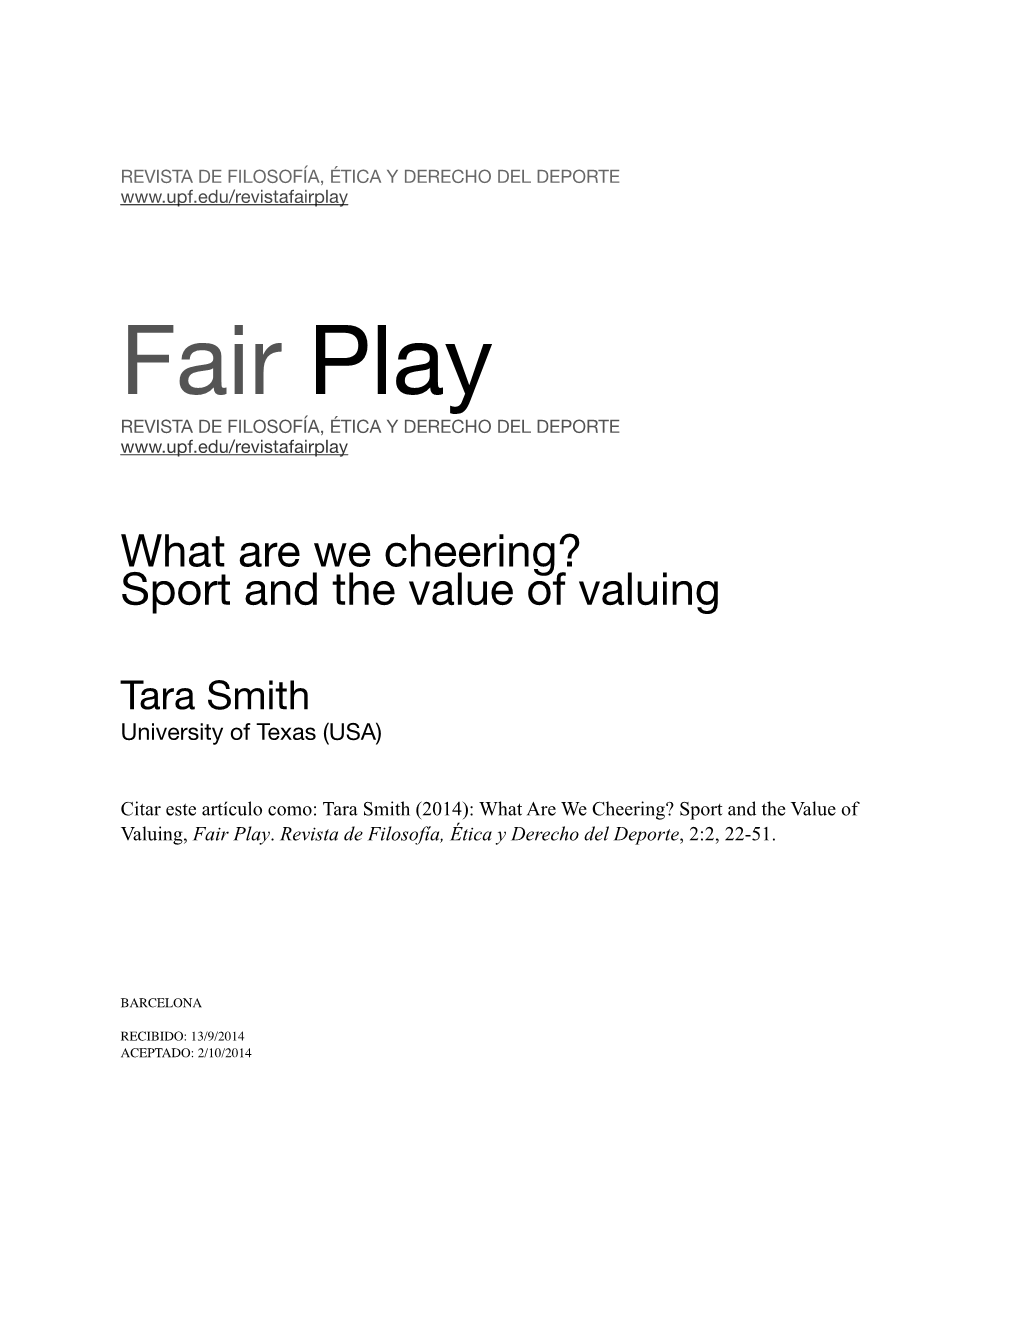 Cheering Final Fair Play Version October 2014